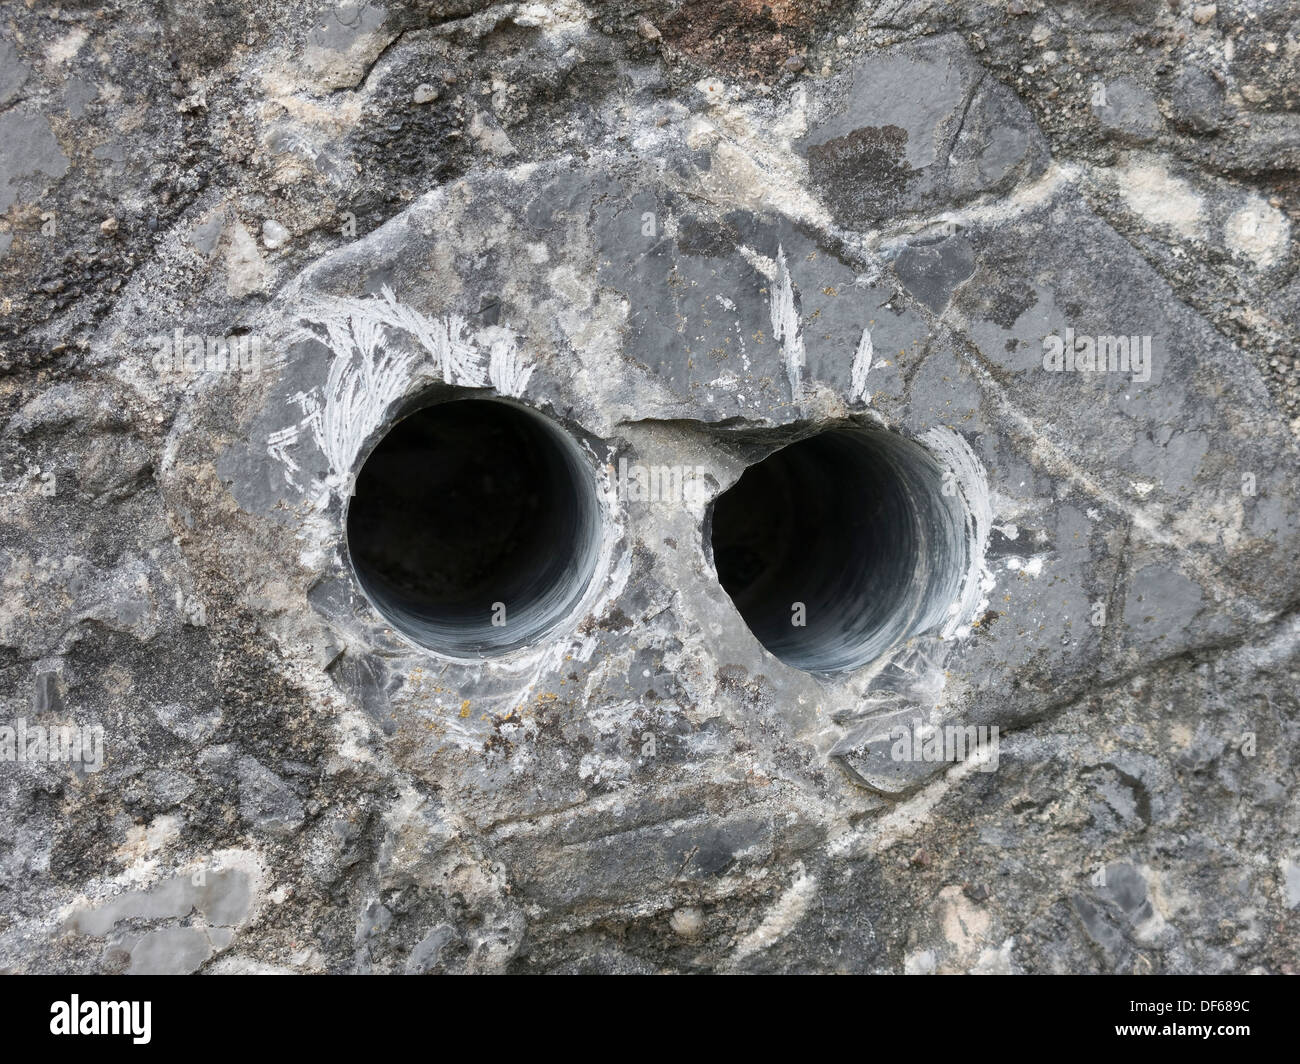 Geology core sample drill holes in pudding stone conglomerate rock, Boreraig, Isle of Skye, Scotland, UK. Stock Photo